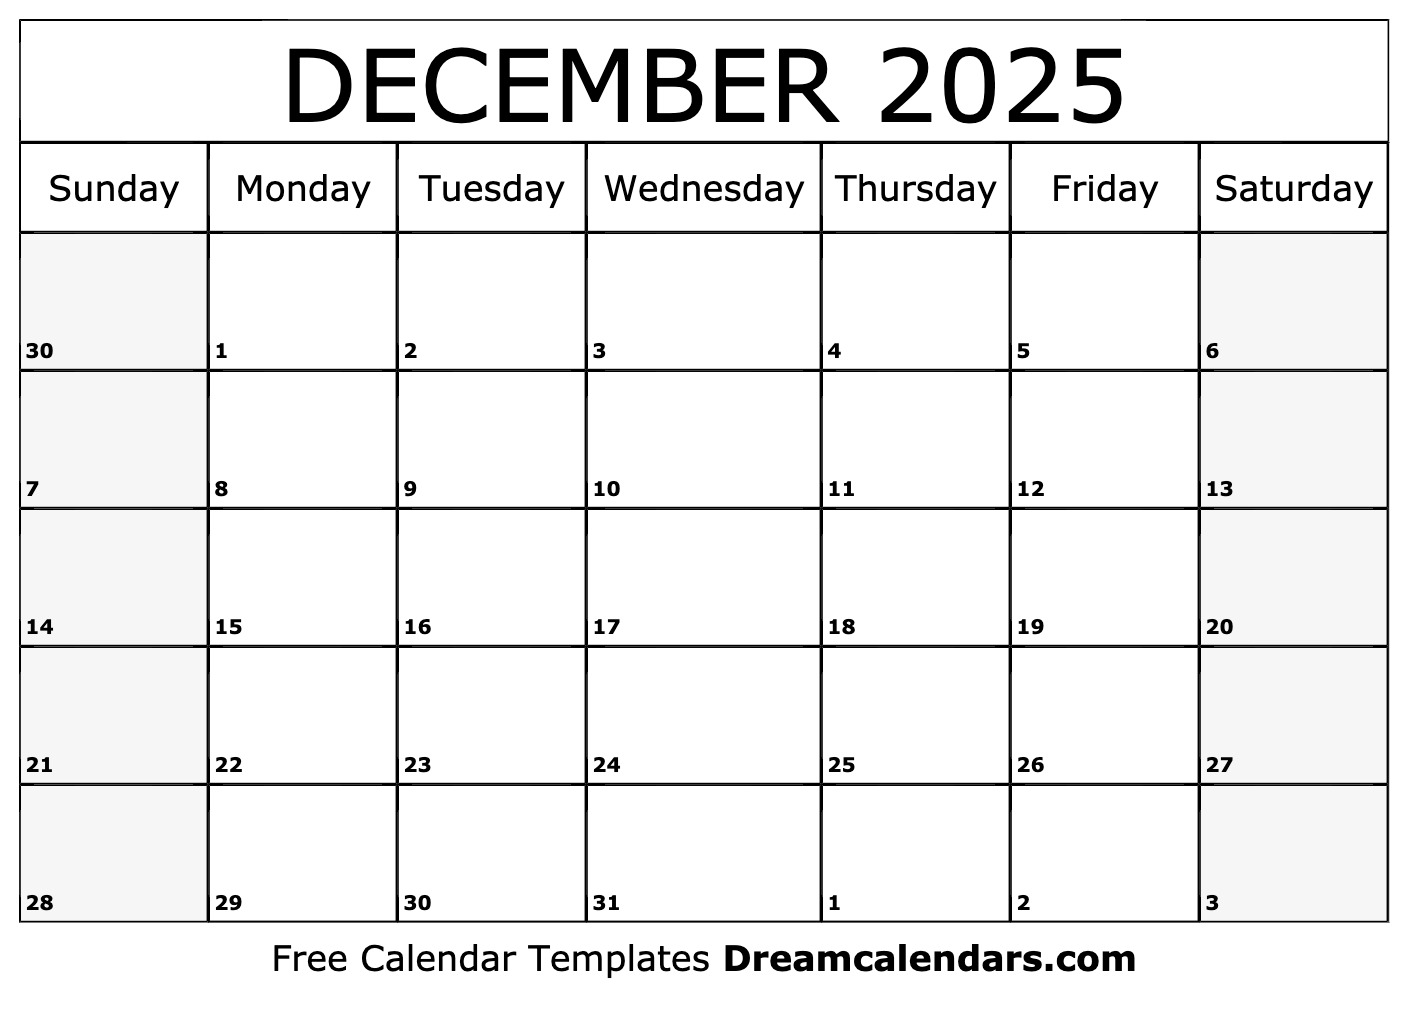 december-2025-calendar-free-blank-printable-with-holidays